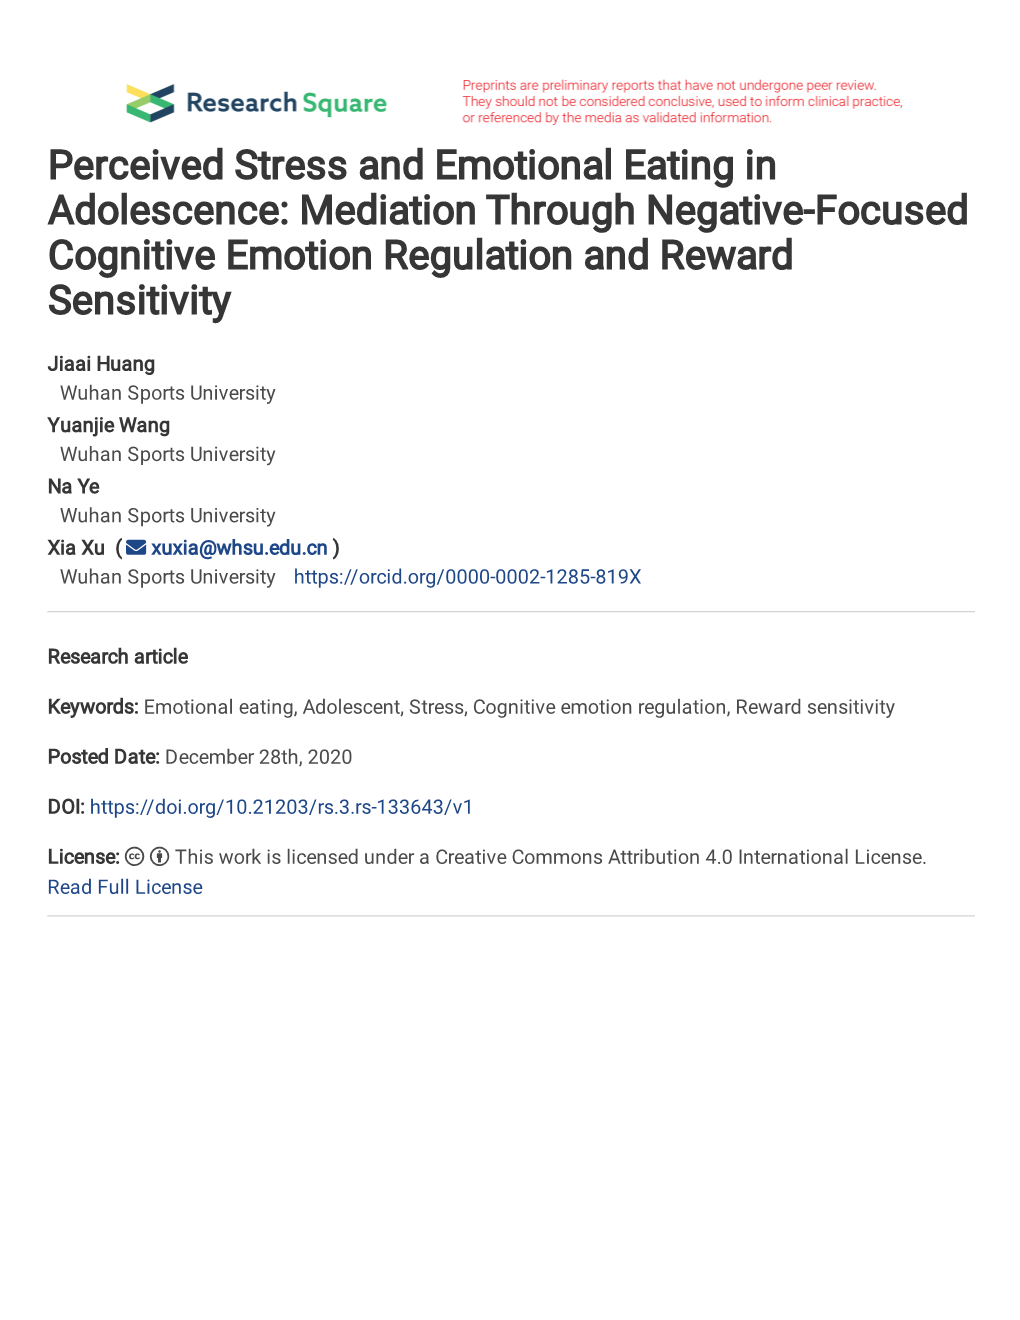 Perceived Stress and Emotional Eating in Adolescence: Mediation Through Negative-Focused Cognitive Emotion Regulation and Reward Sensitivity